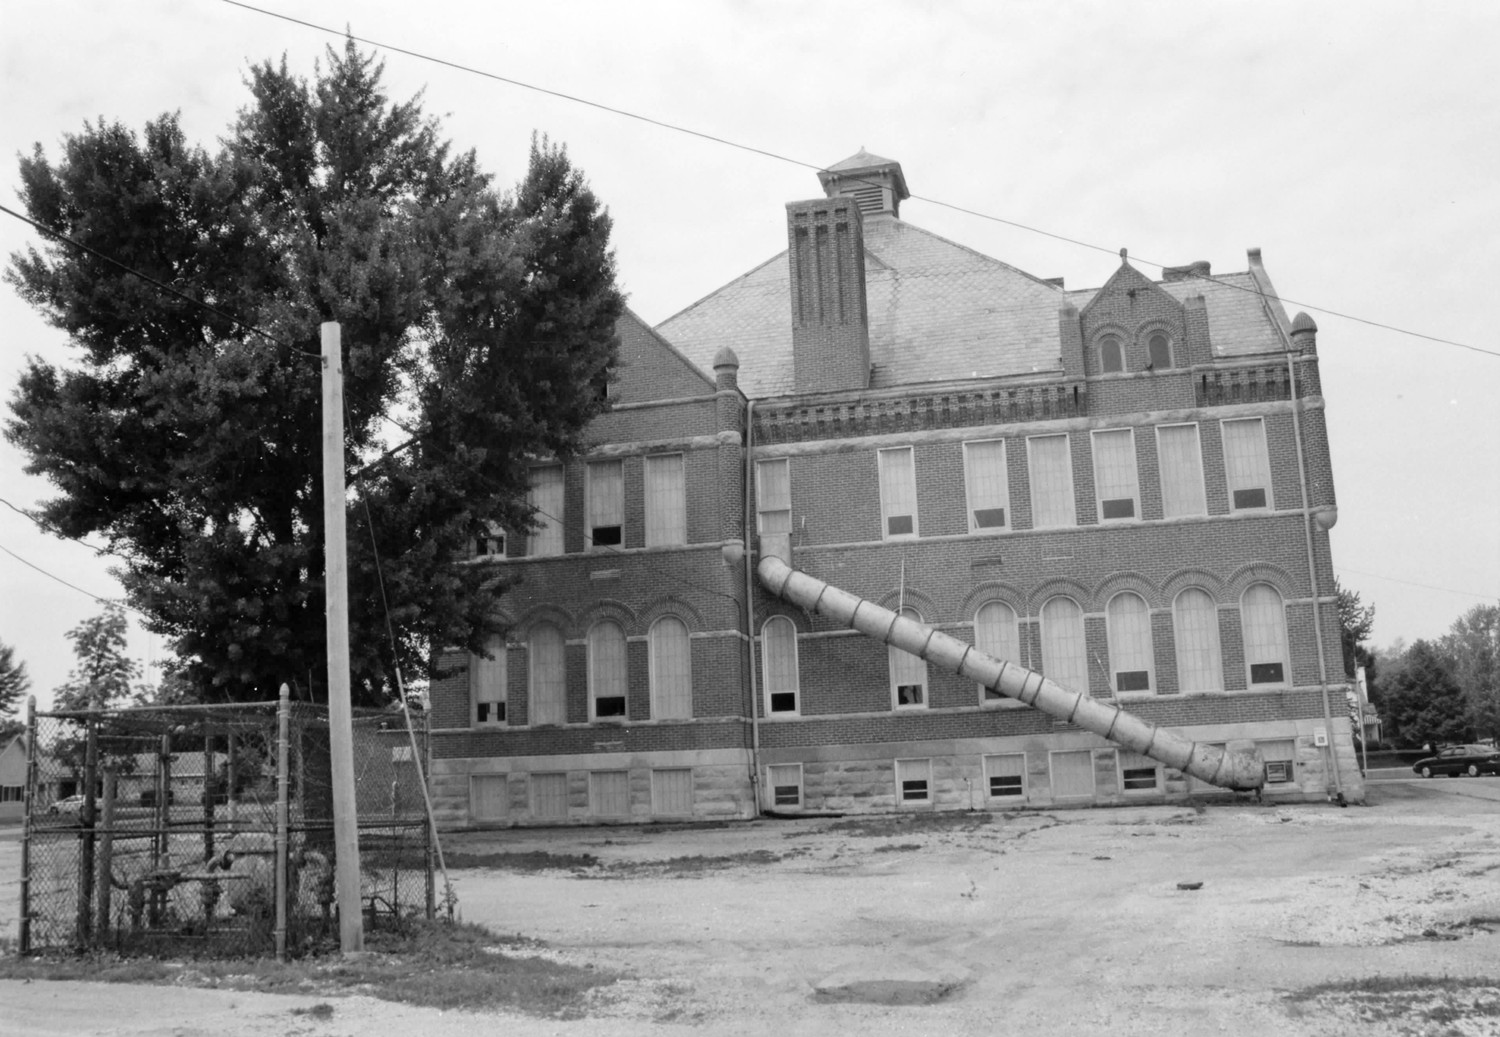 Gas City High School - East Ward School, Gas City Indiana 1894 building, east elevation, looking west (2003)